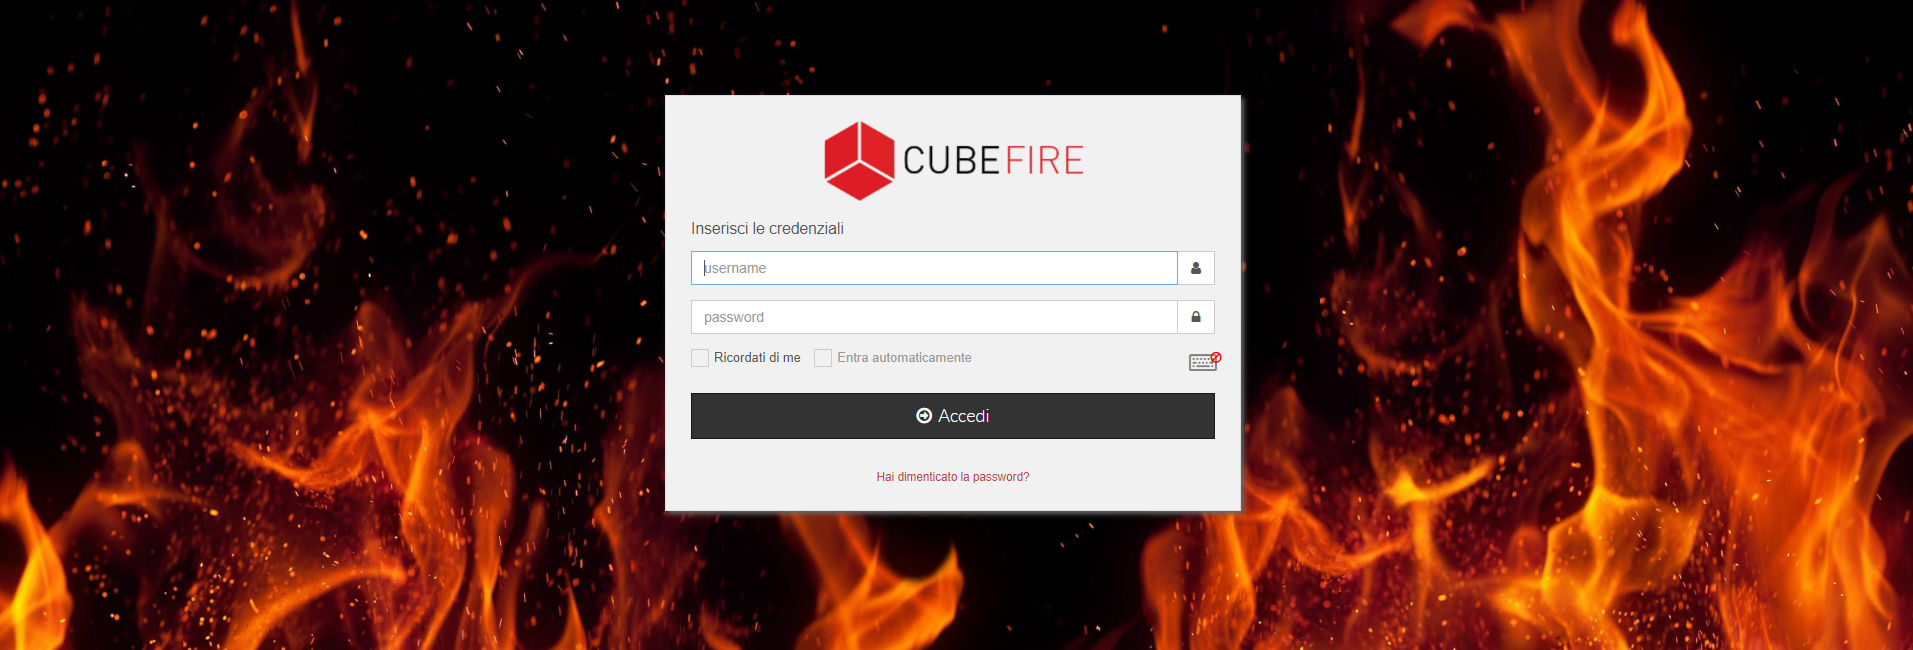 cubefire-login